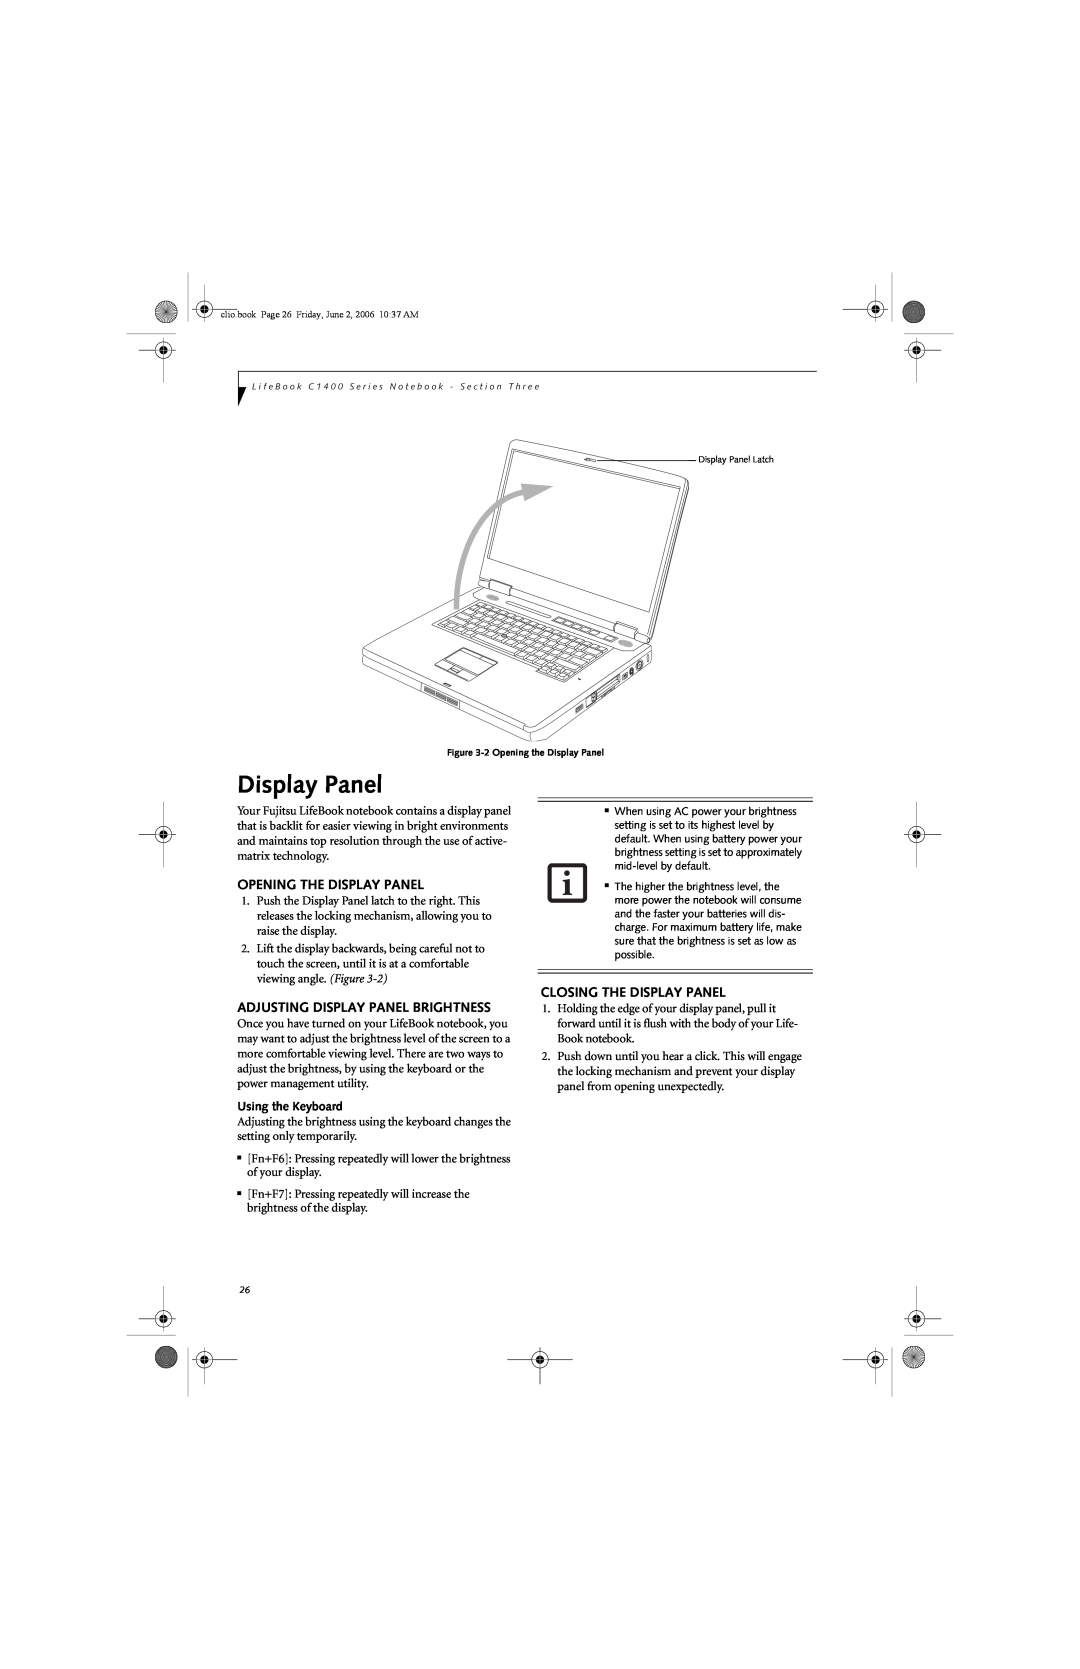 Fujitsu C1410 manual Opening The Display Panel, Adjusting Display Panel Brightness, Closing The Display Panel 